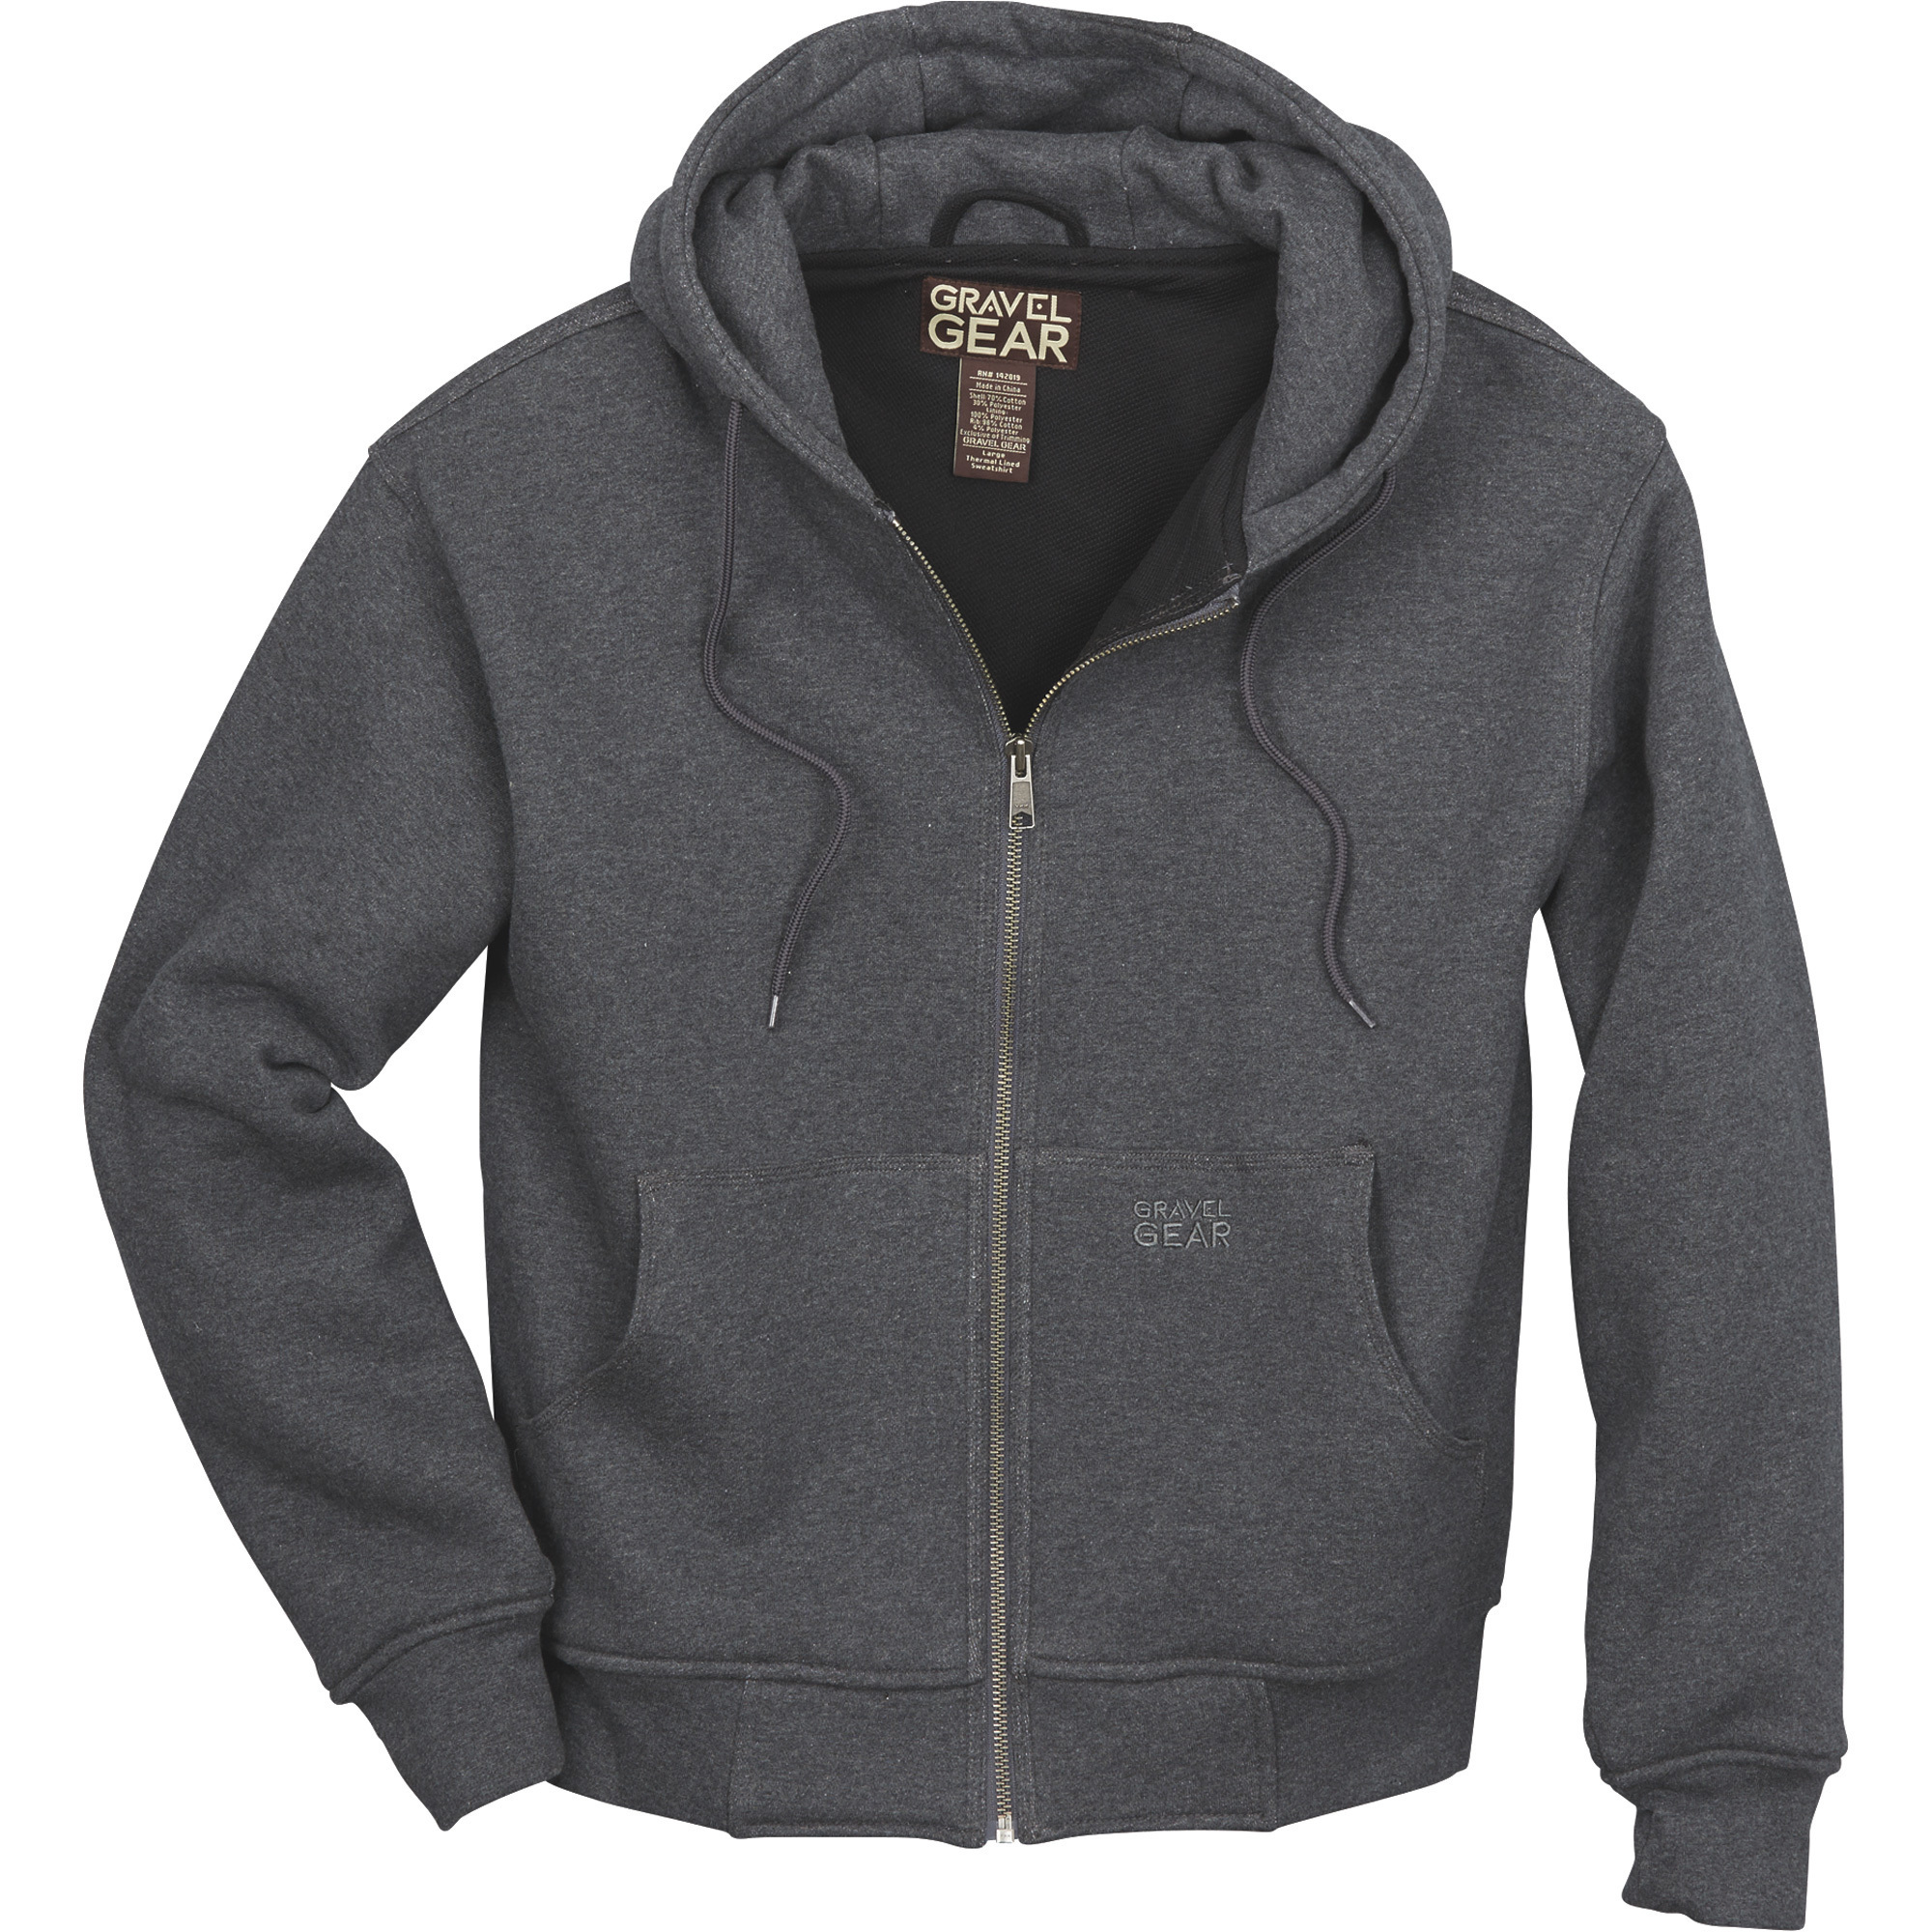 Gravel Gear Men's Hooded Thermal-Lined Sweatshirt â Heather Gray, XL